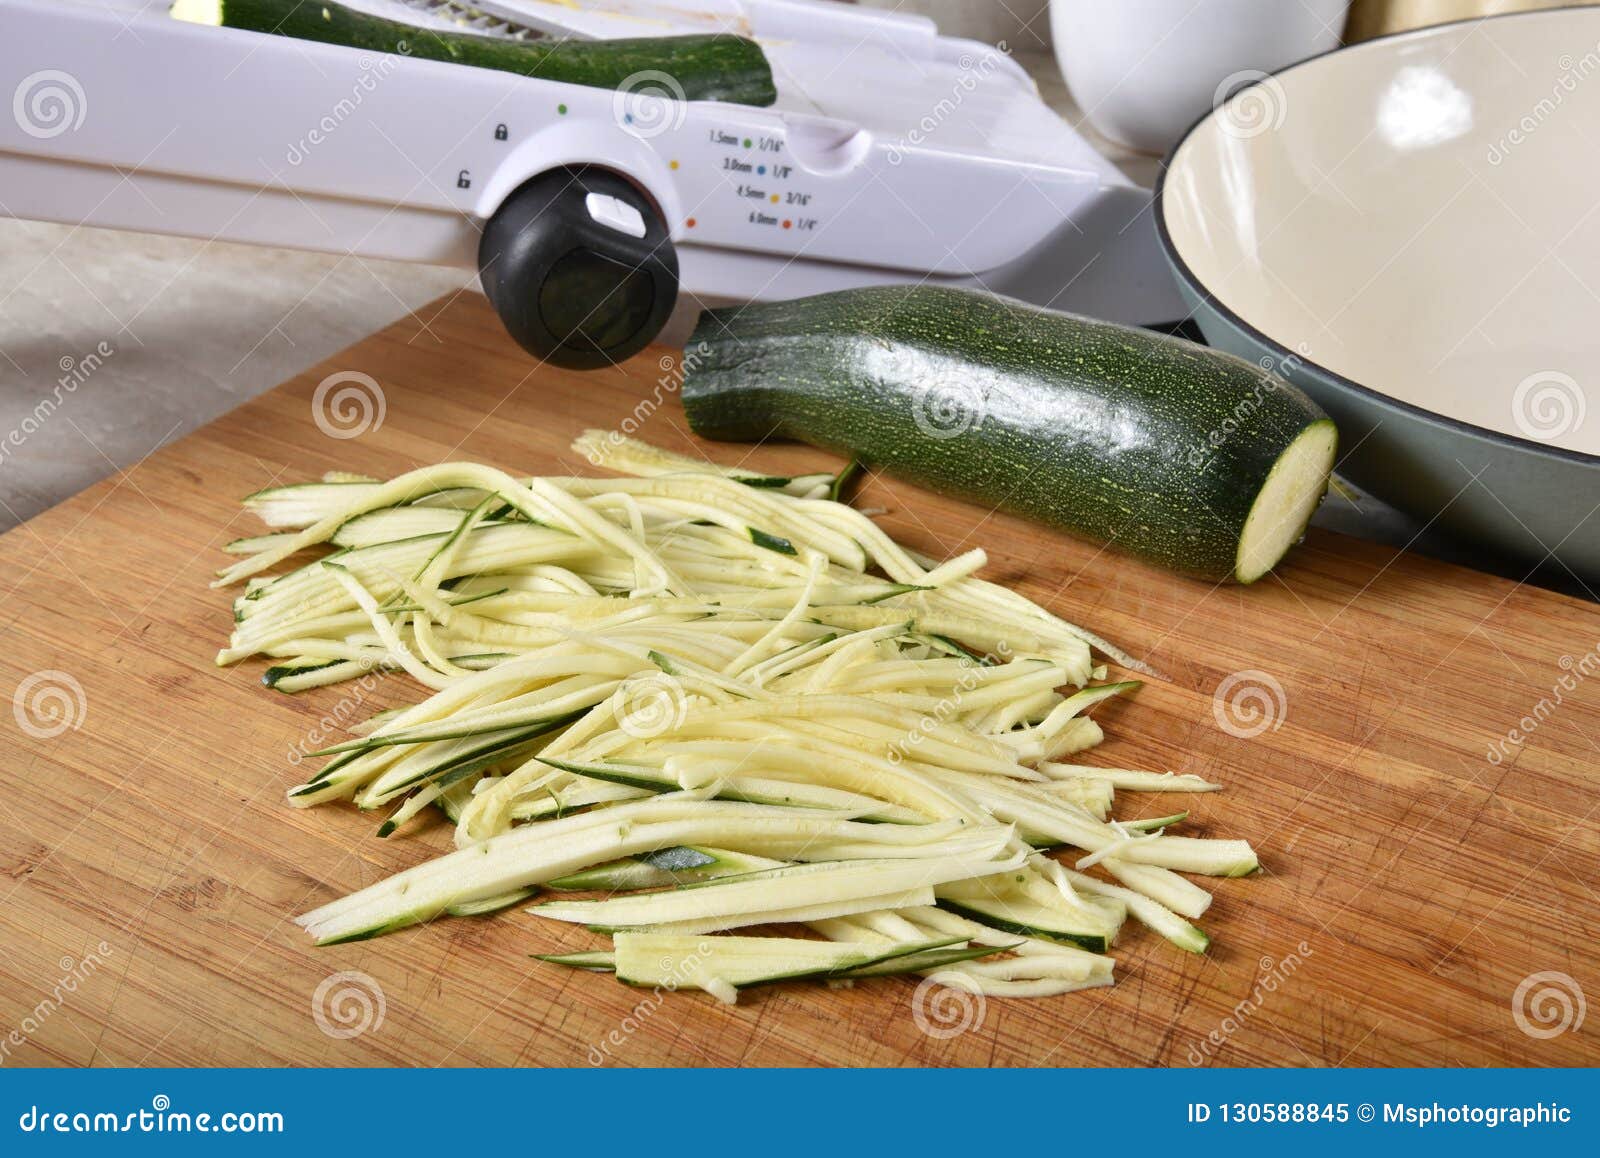 https://thumbs.dreamstime.com/z/fresh-organic-jullienned-zucchini-cutting-board-mandoline-slicer-saute-pan-julienned-zucchini-squash-130588845.jpg